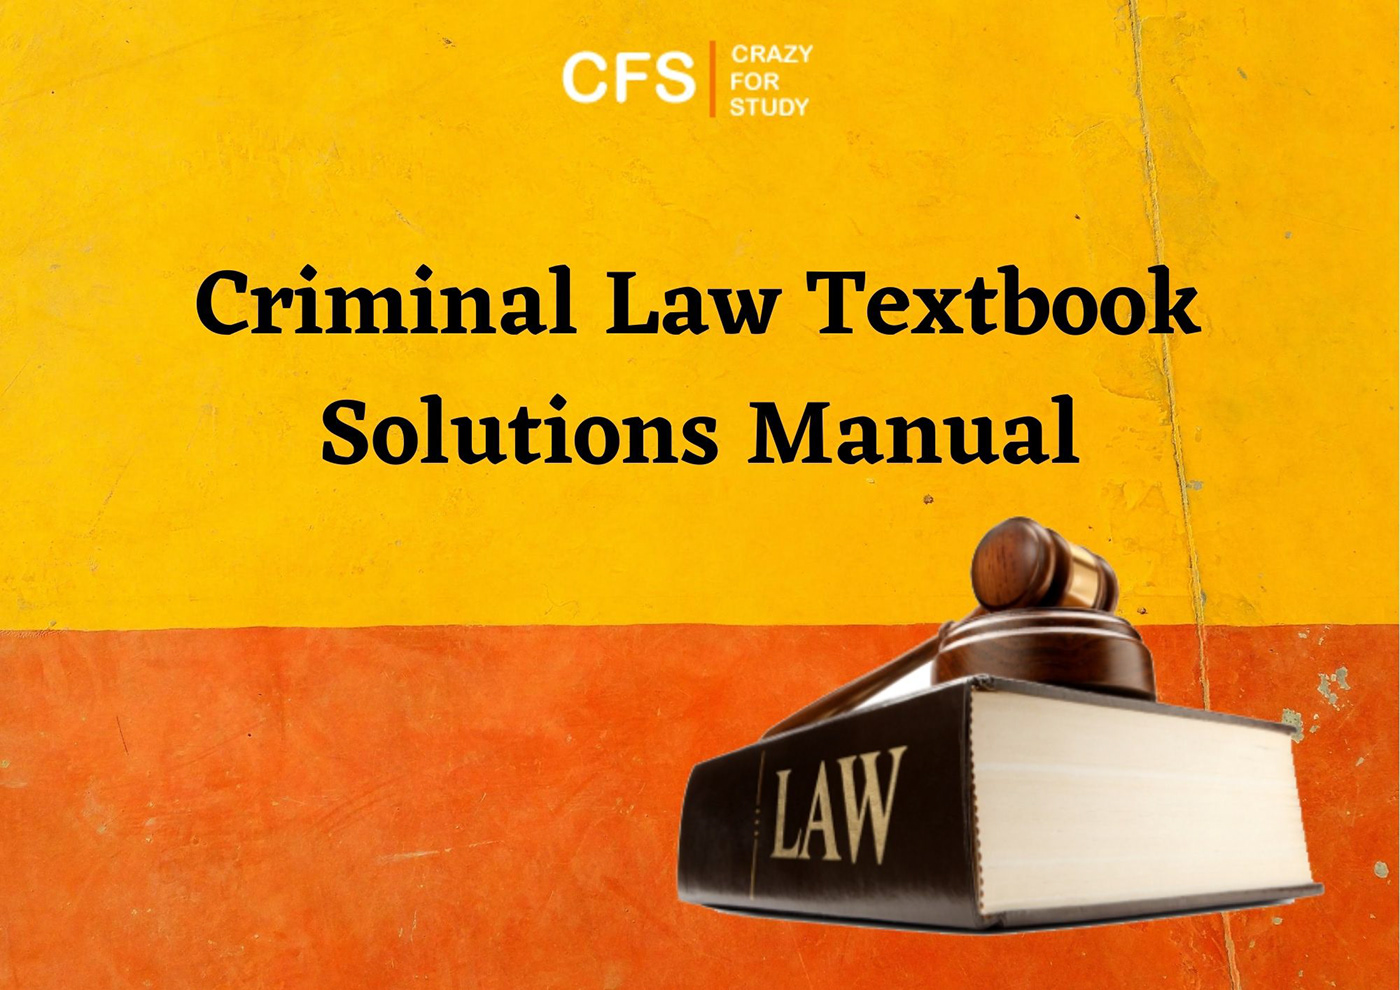 Criminal Law Textbook Solution Manual
